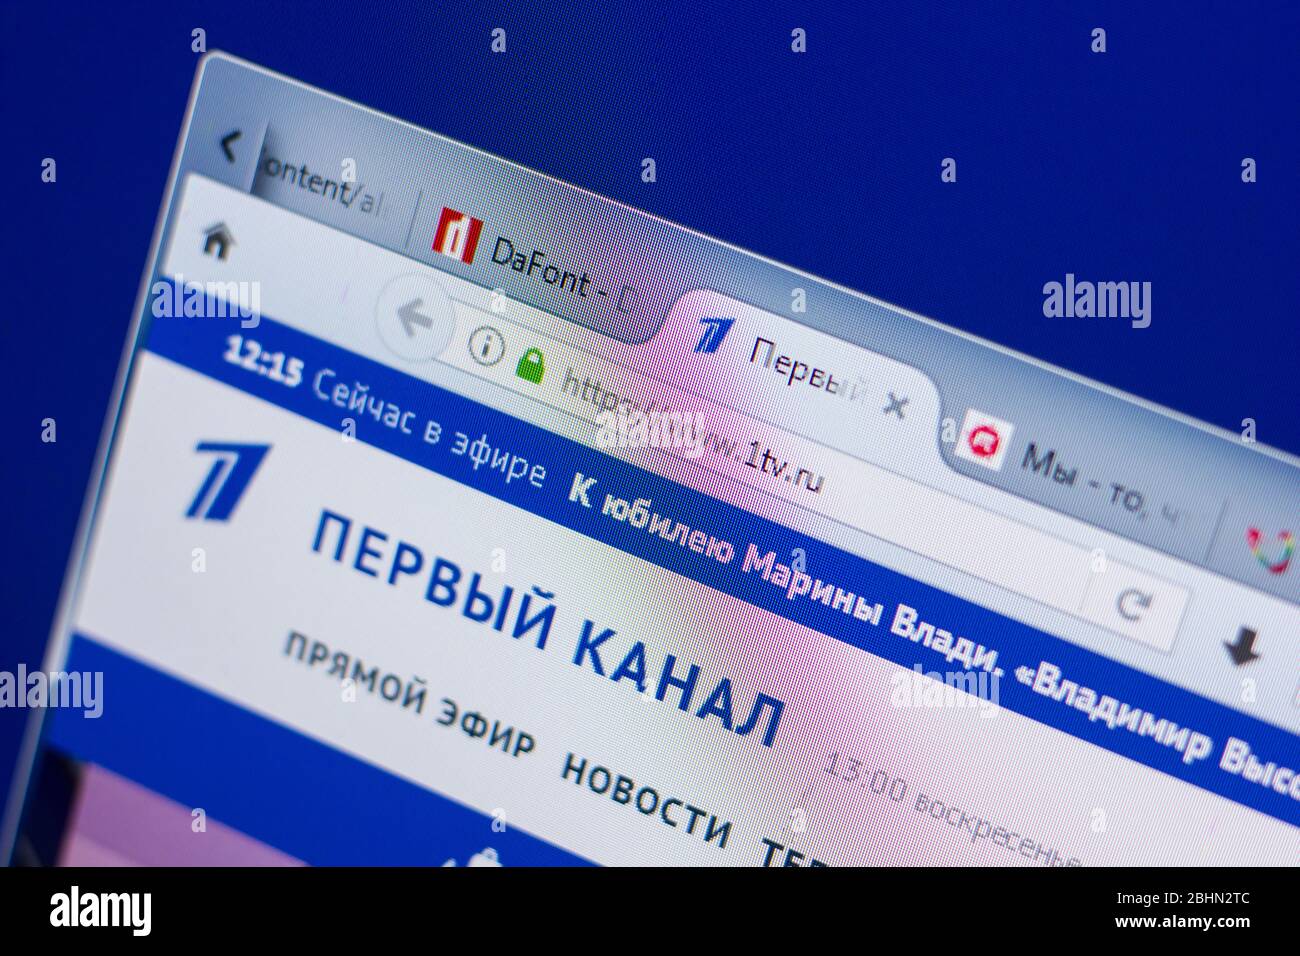 Ryazan, Russia - May 13, 2018: 1tv website on the display of PC, url - 1tv.ru Stock Photo